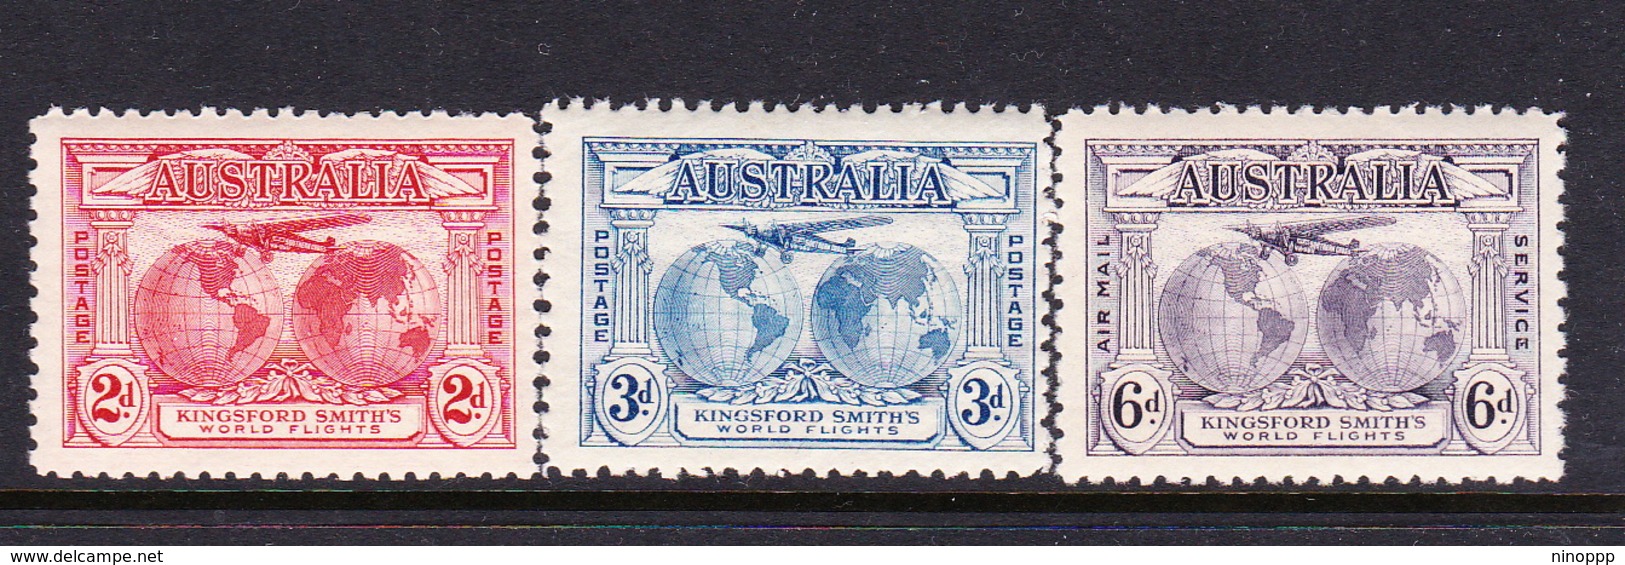 Australia SG 121-123 1931 Kingsford Smith's Flights, Mint Never Hinged - Neufs